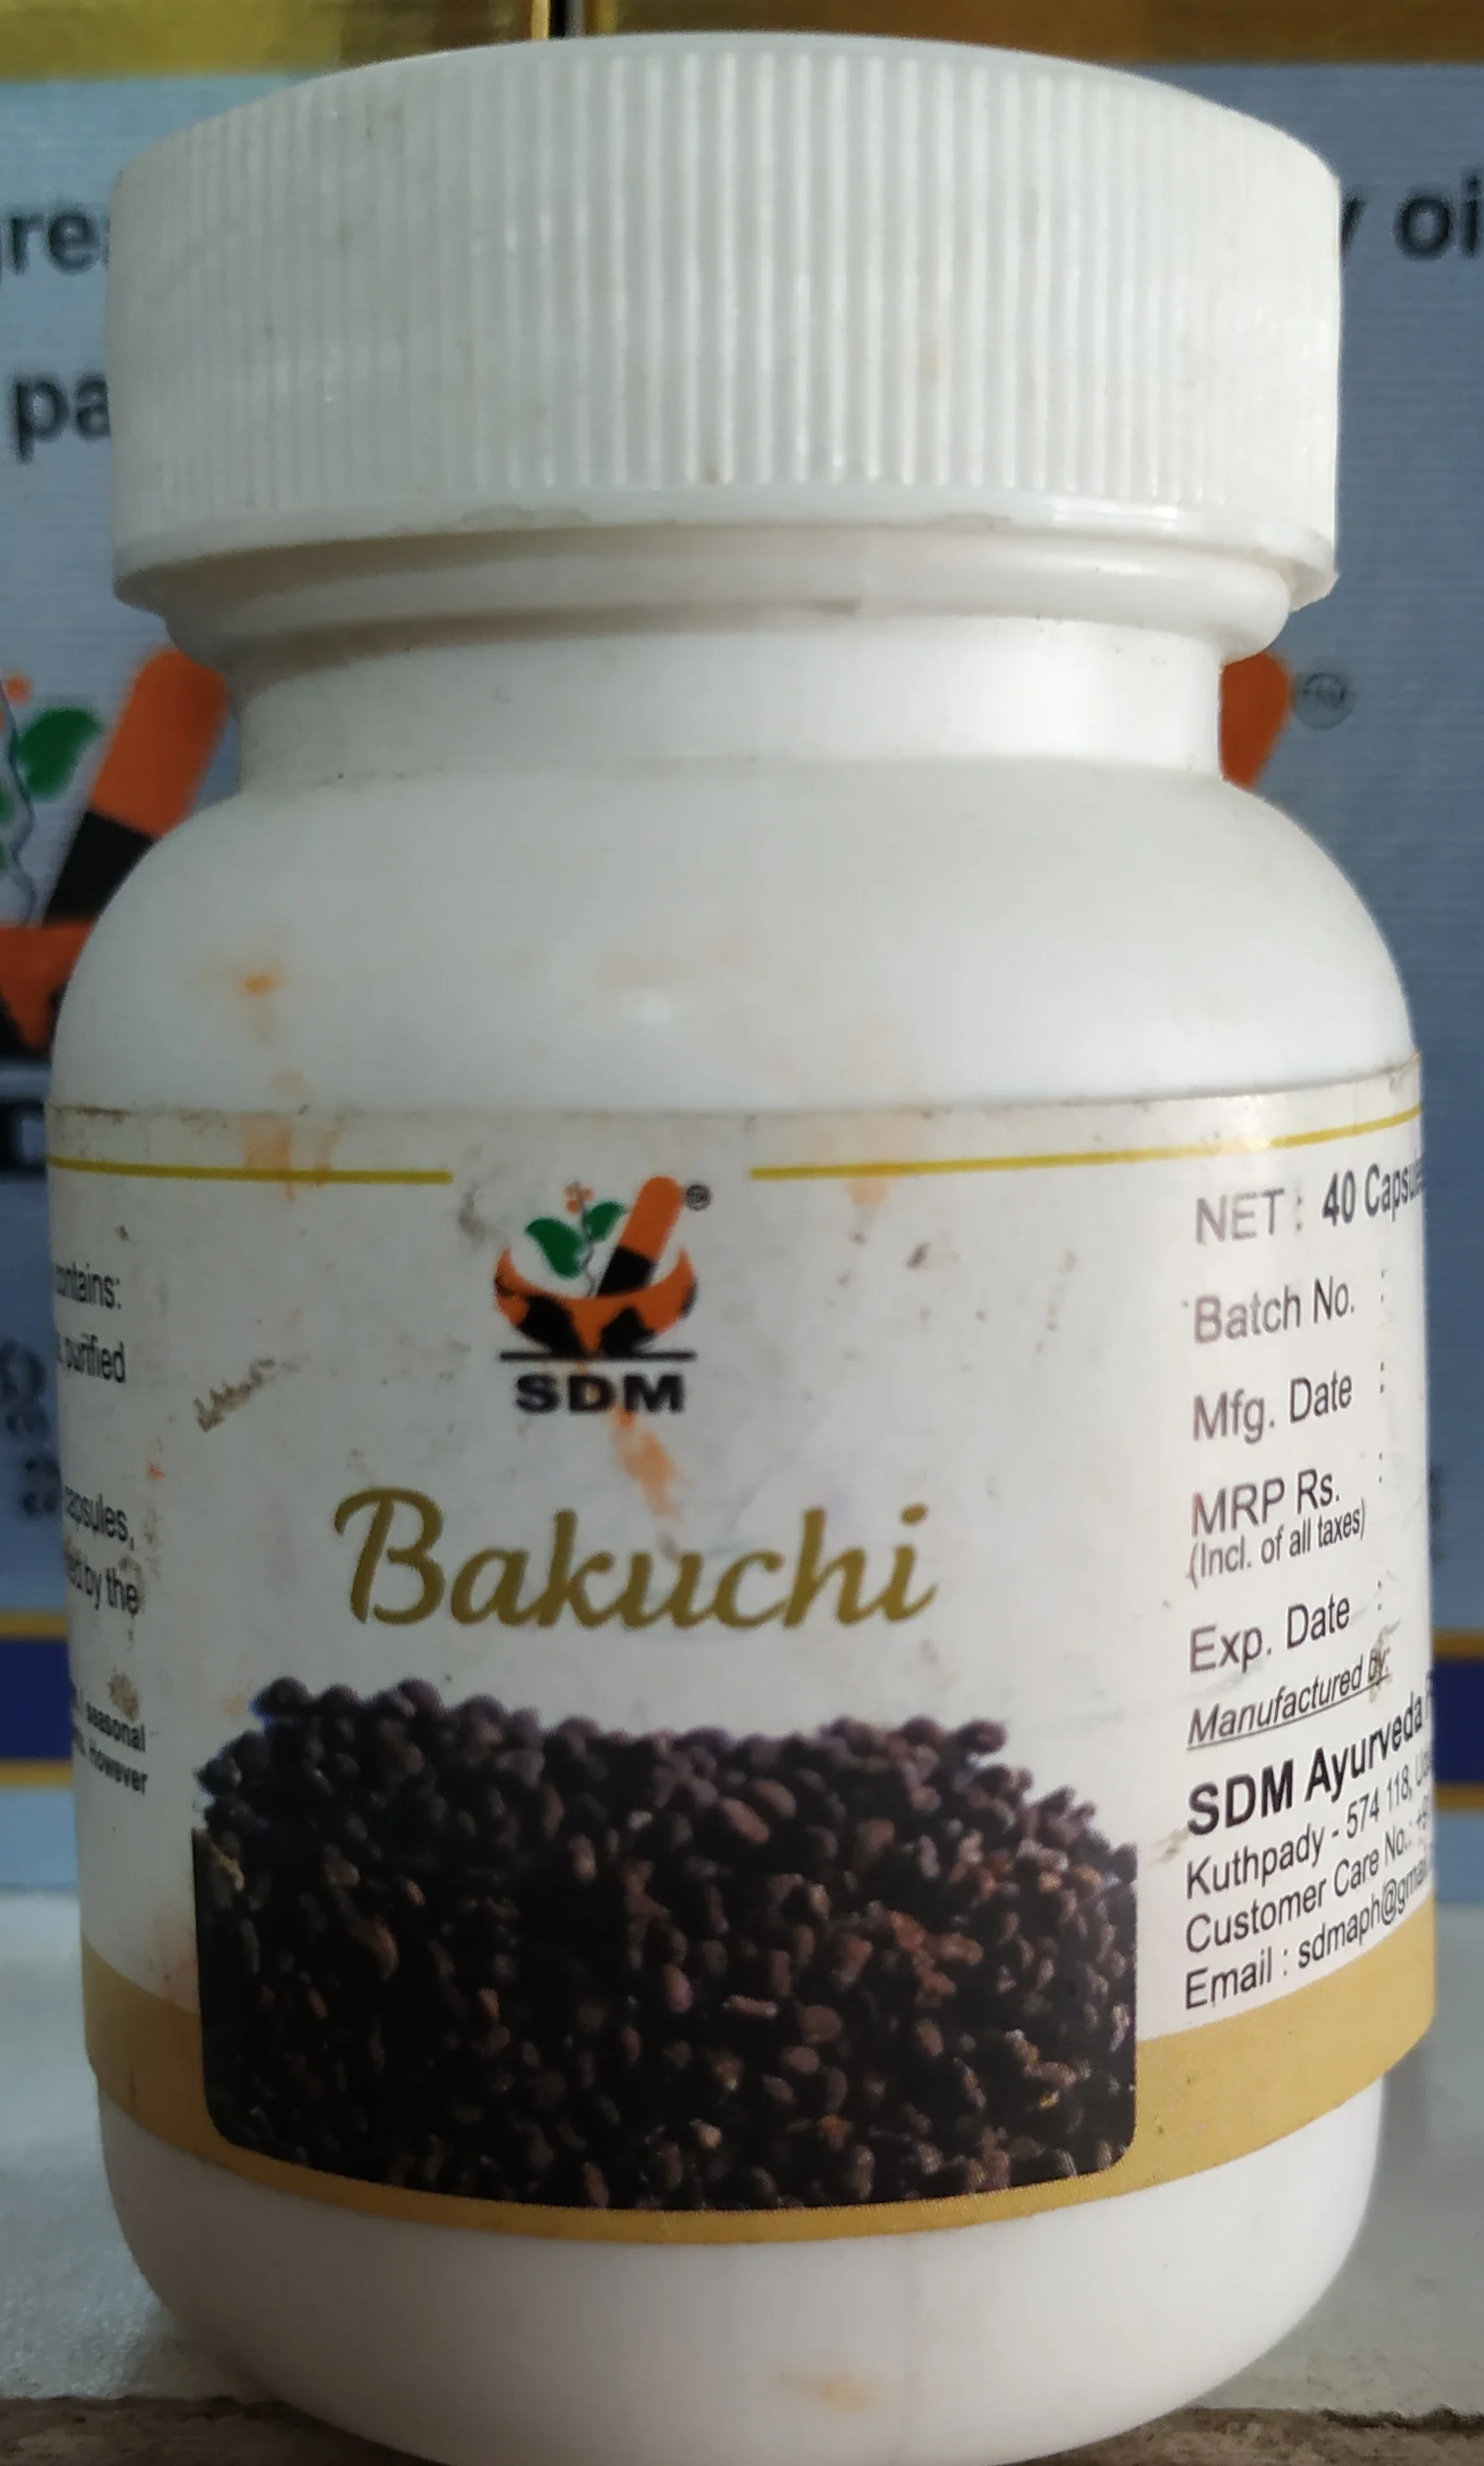 bakuchi capsule 40cap upto 15% off sdm ayurveda